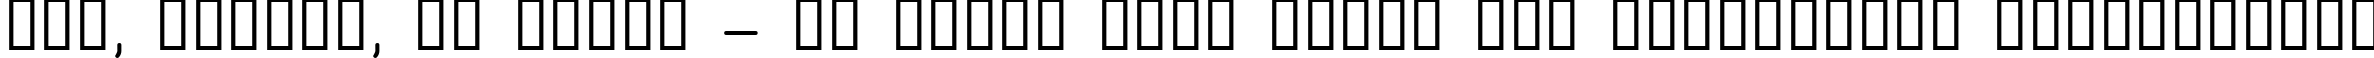 Пример написания шрифтом Aunchanted Xspace Bold текста на украинском